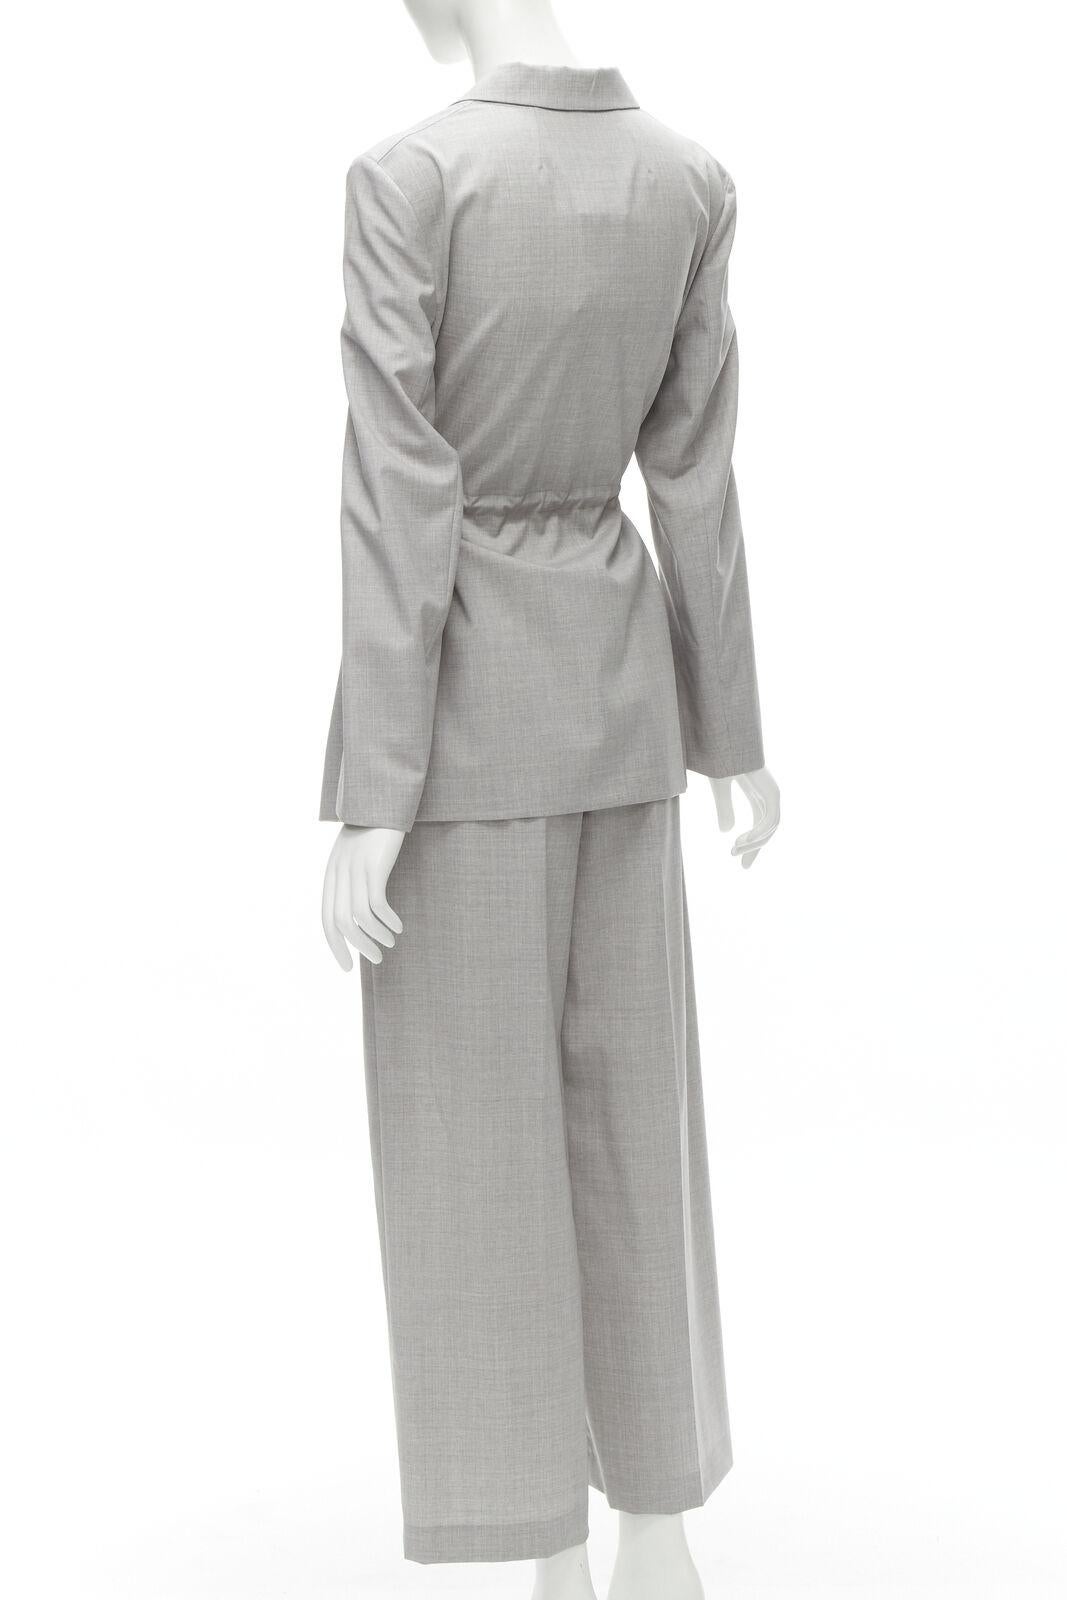 THEORY Drape wool grey drawstring cinched waist blazer wide leg pants set US6 S For Sale 1